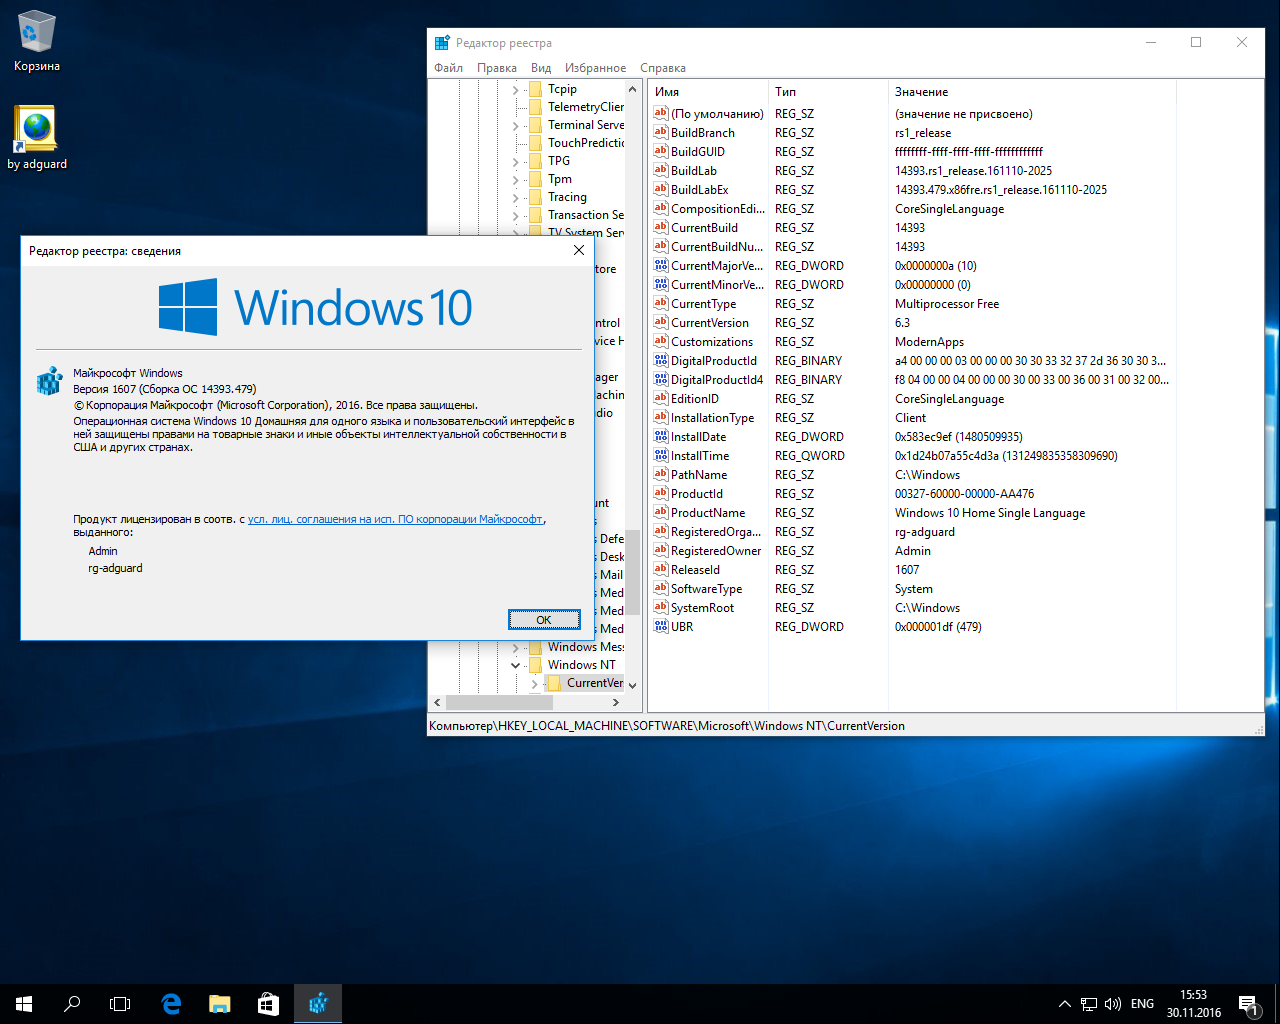 is windows 10 x86 or x64